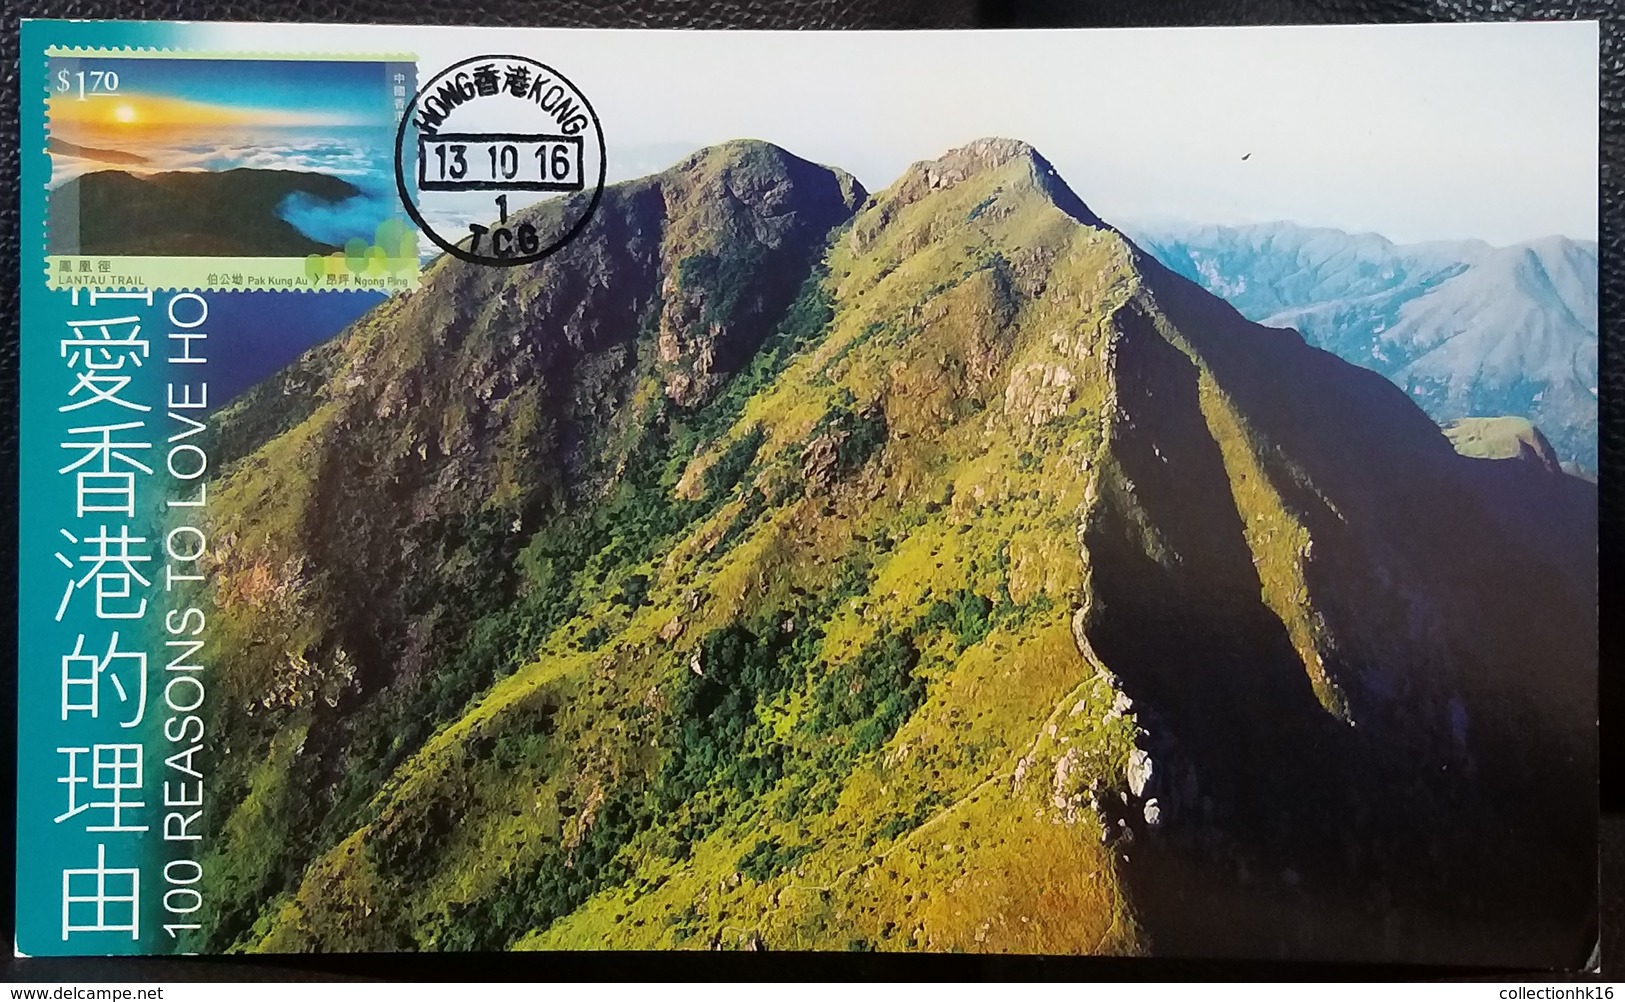 HK Hiking Trails Series No. 1: Lantau Trail Lantau Peak Sun Rise 2016 Hong Kong Maximum Card MC (Location Postmark) - Cartes-maximum